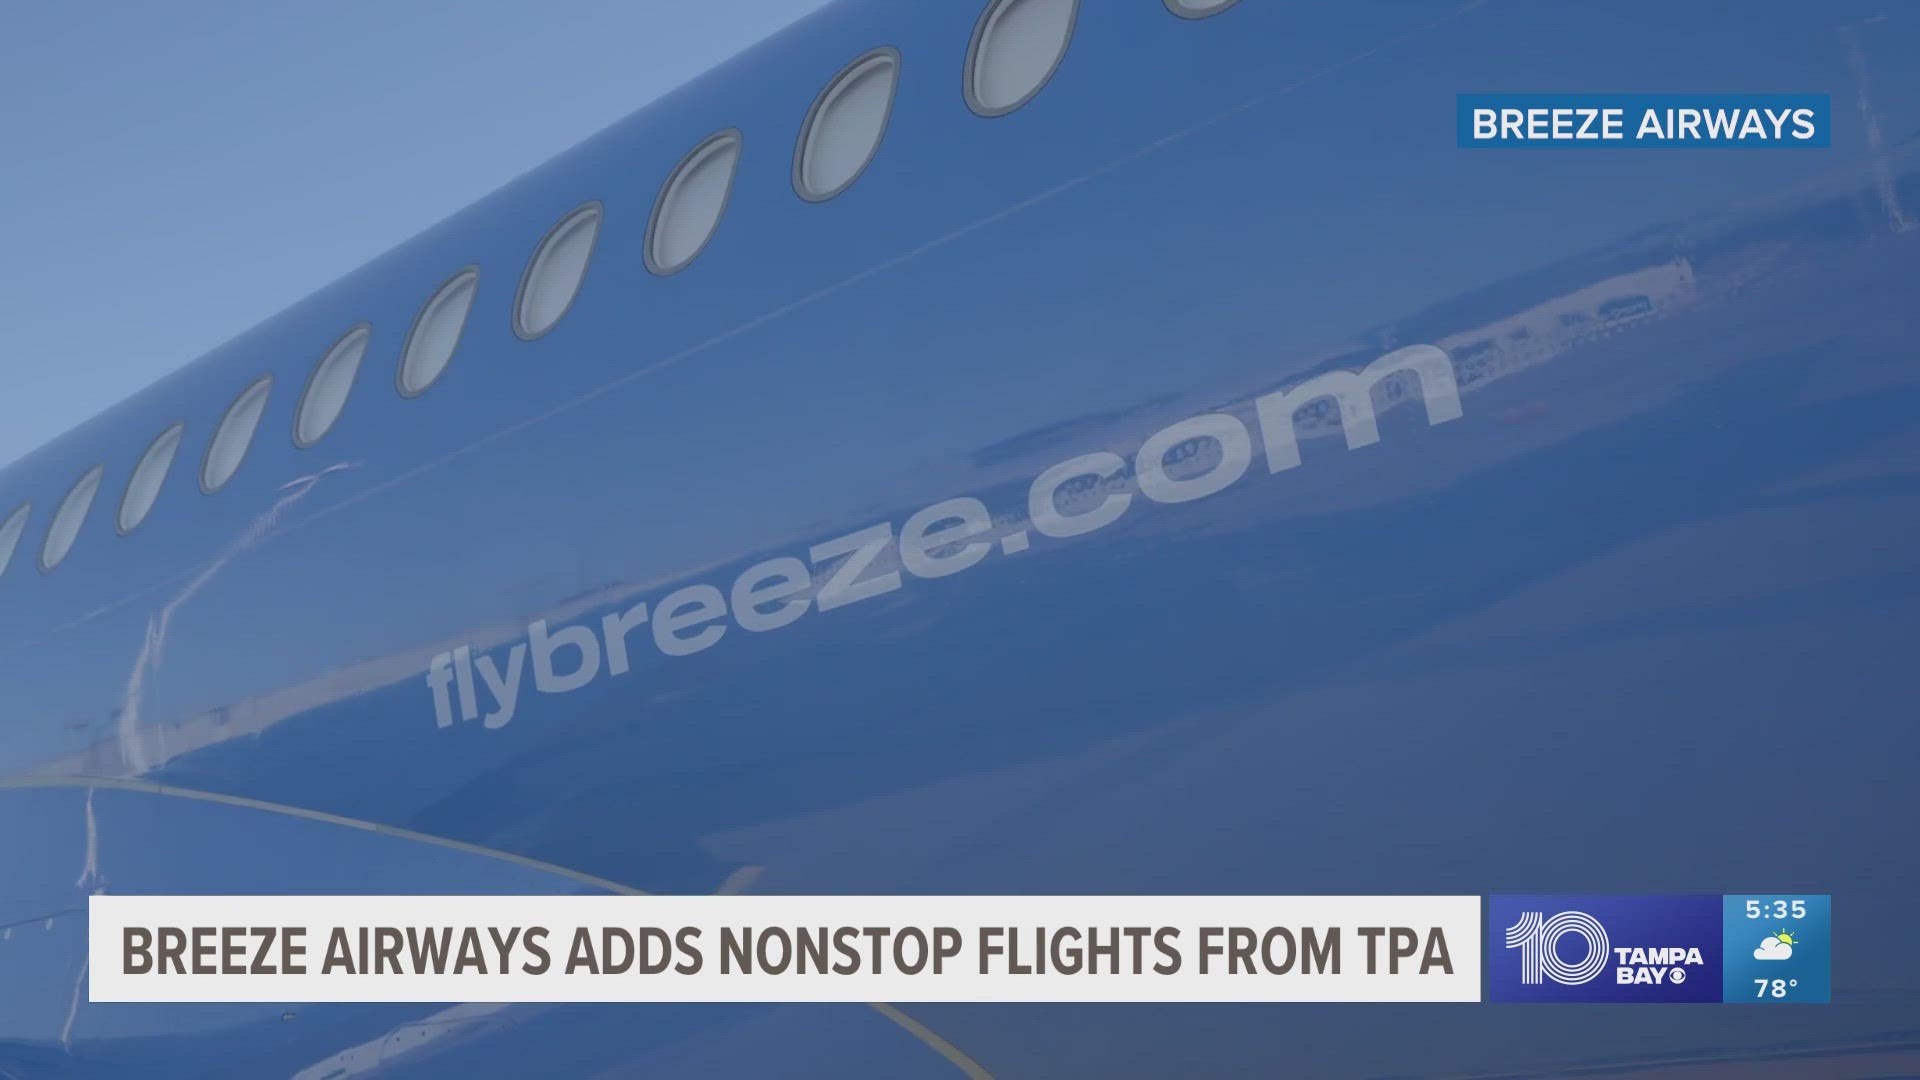 On Tuesday, TPA announced a new nonstop flight on Breeze Airways to Santa Ana’s John Wayne Airport.